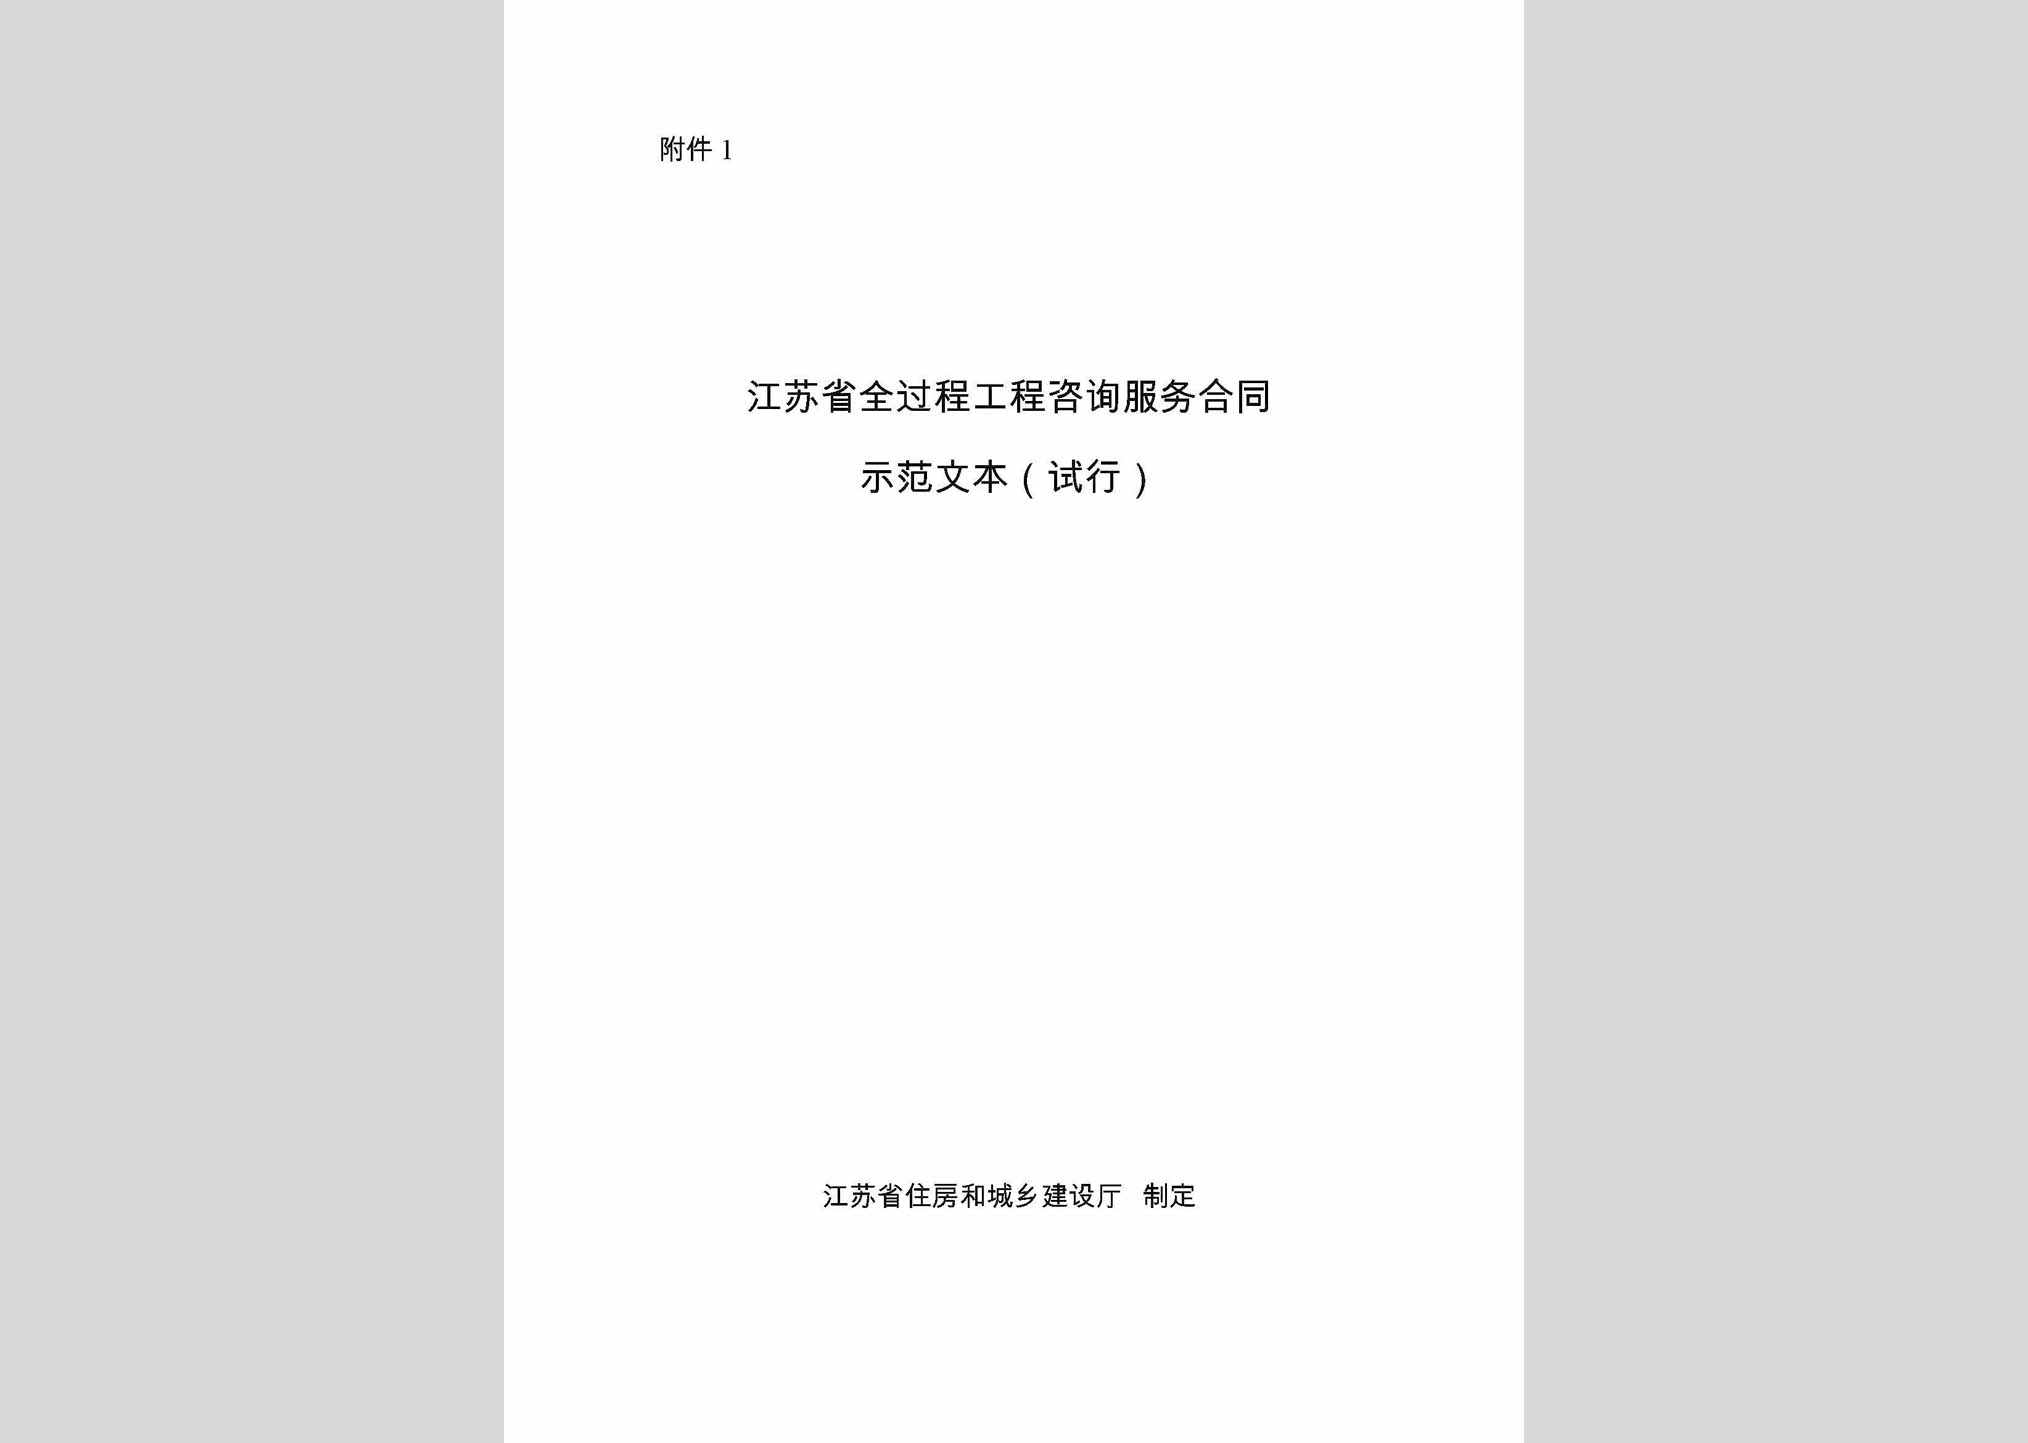 ZXHTSFWB：江苏省全过程工程咨询服务合同示范文本(试行)